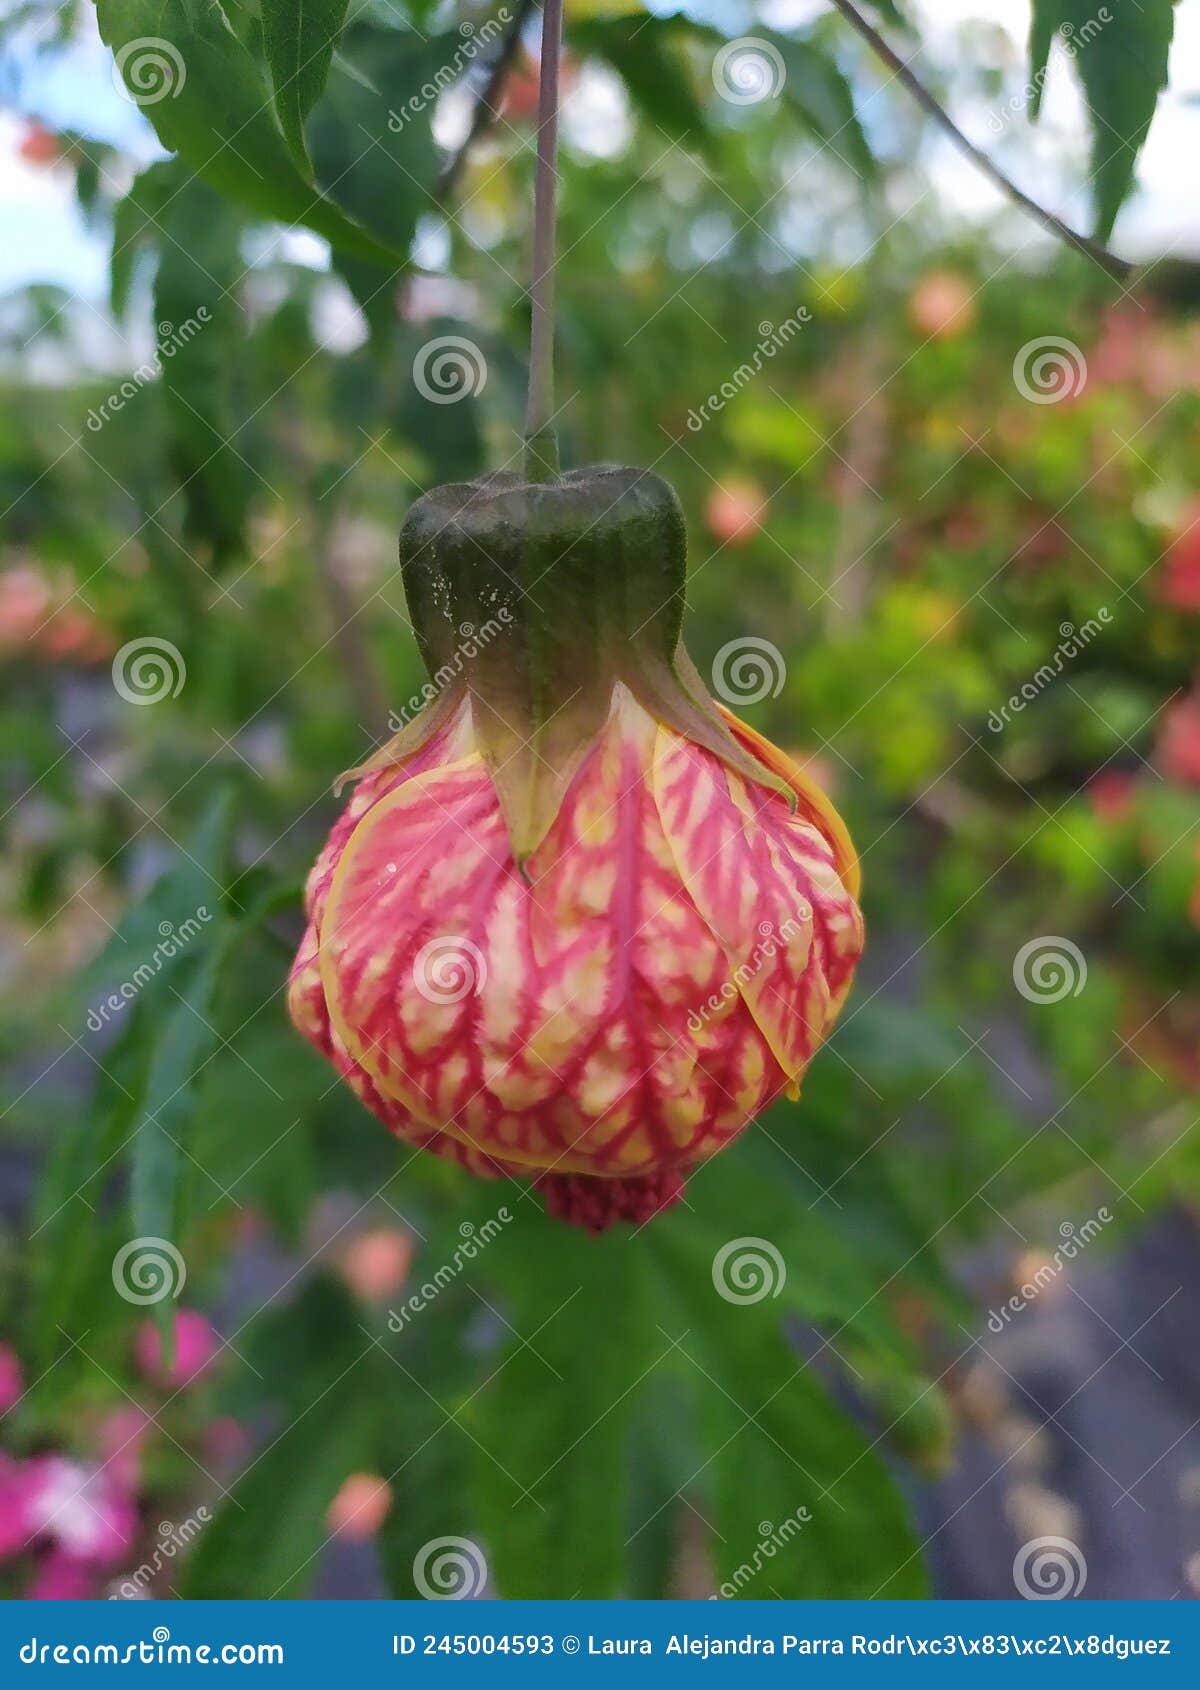 chinese bell or chinese lantern hanging from the branch of the plant farolillo chino colgada de la planta